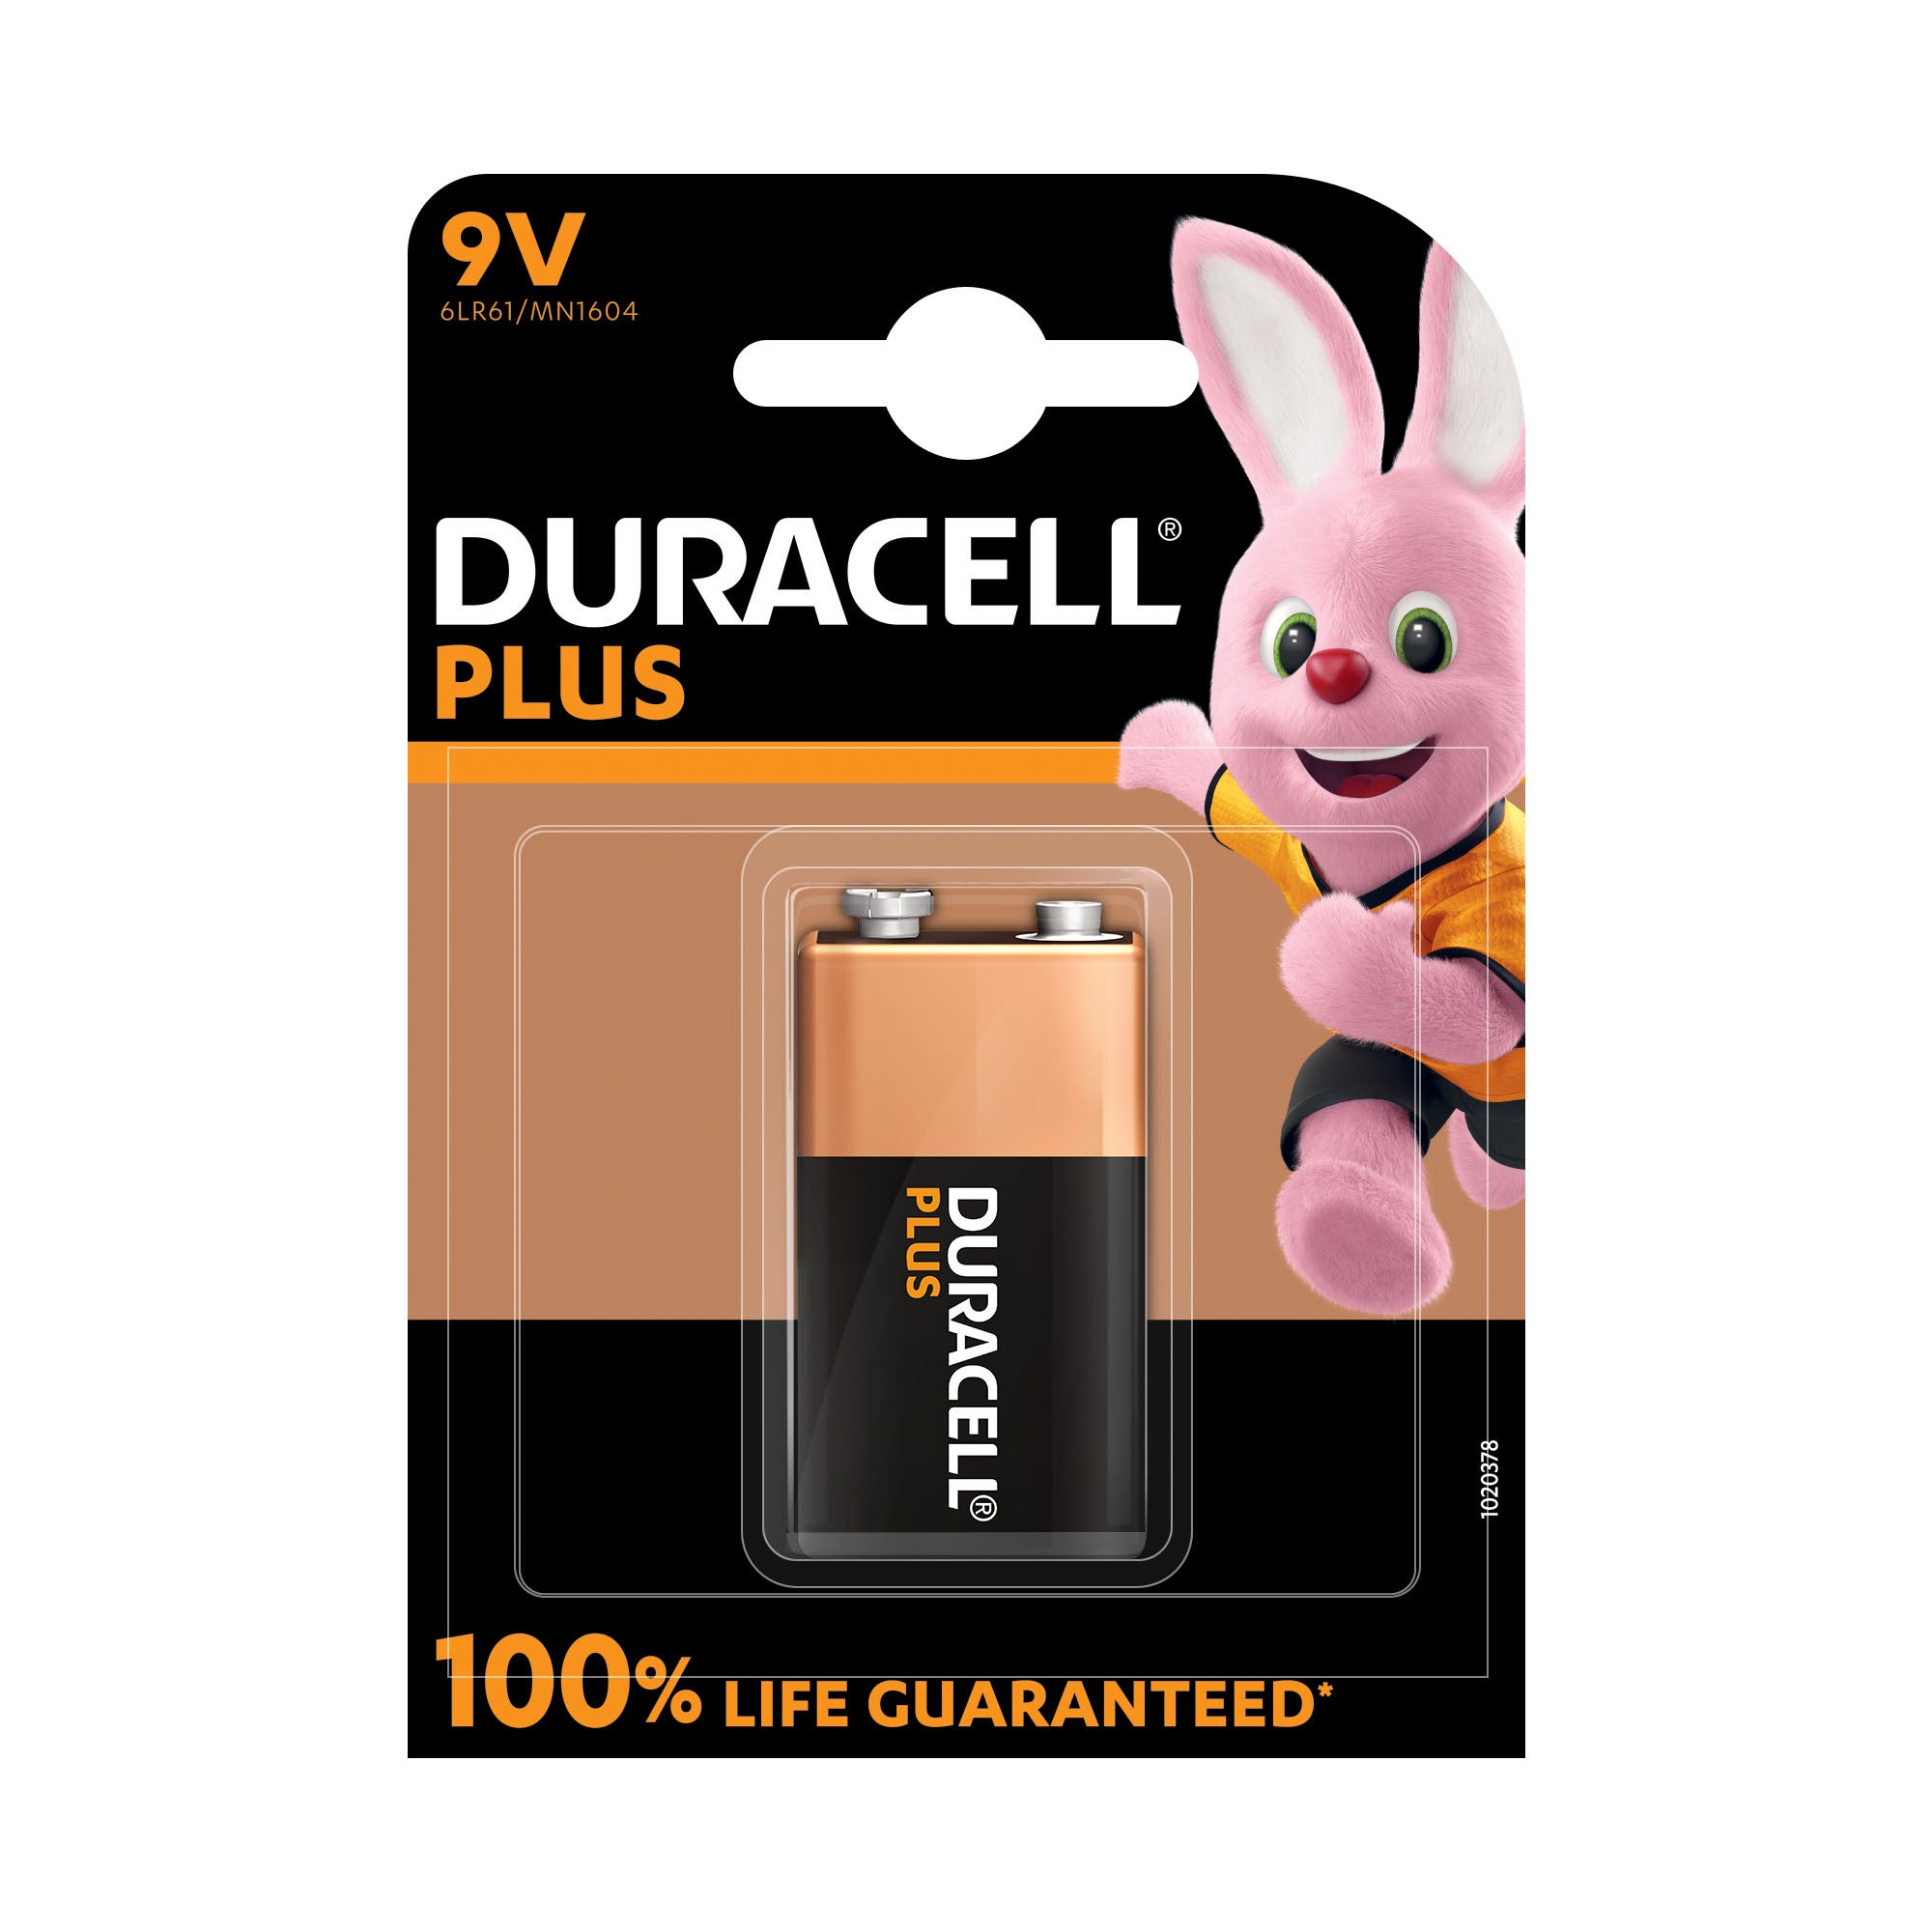 Pack of 1 9V Duracell Plus 100 Batteries